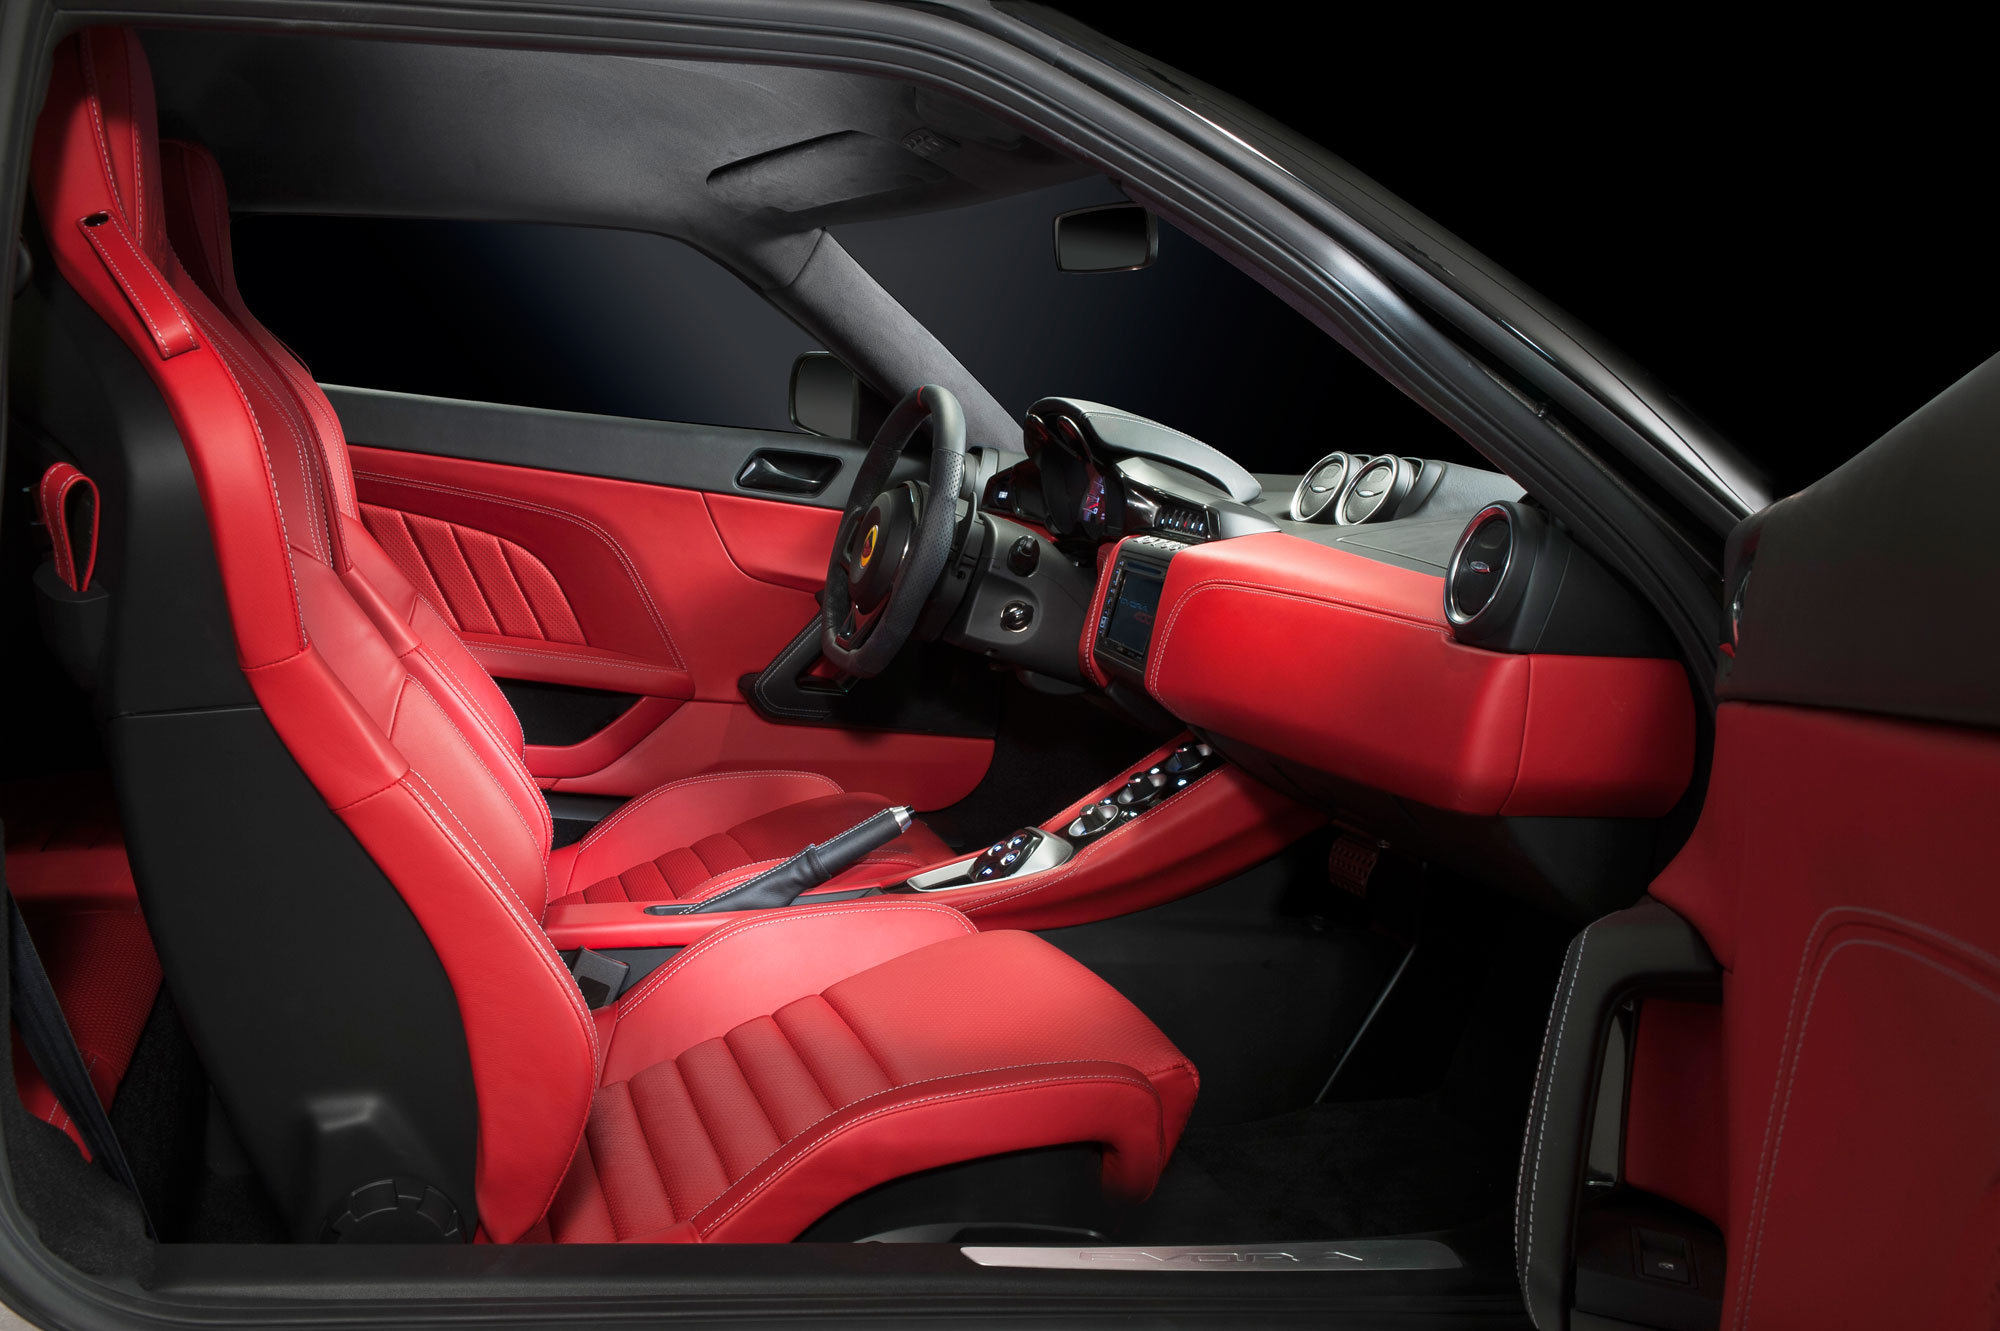 Lotus Evora interior - Front Seats